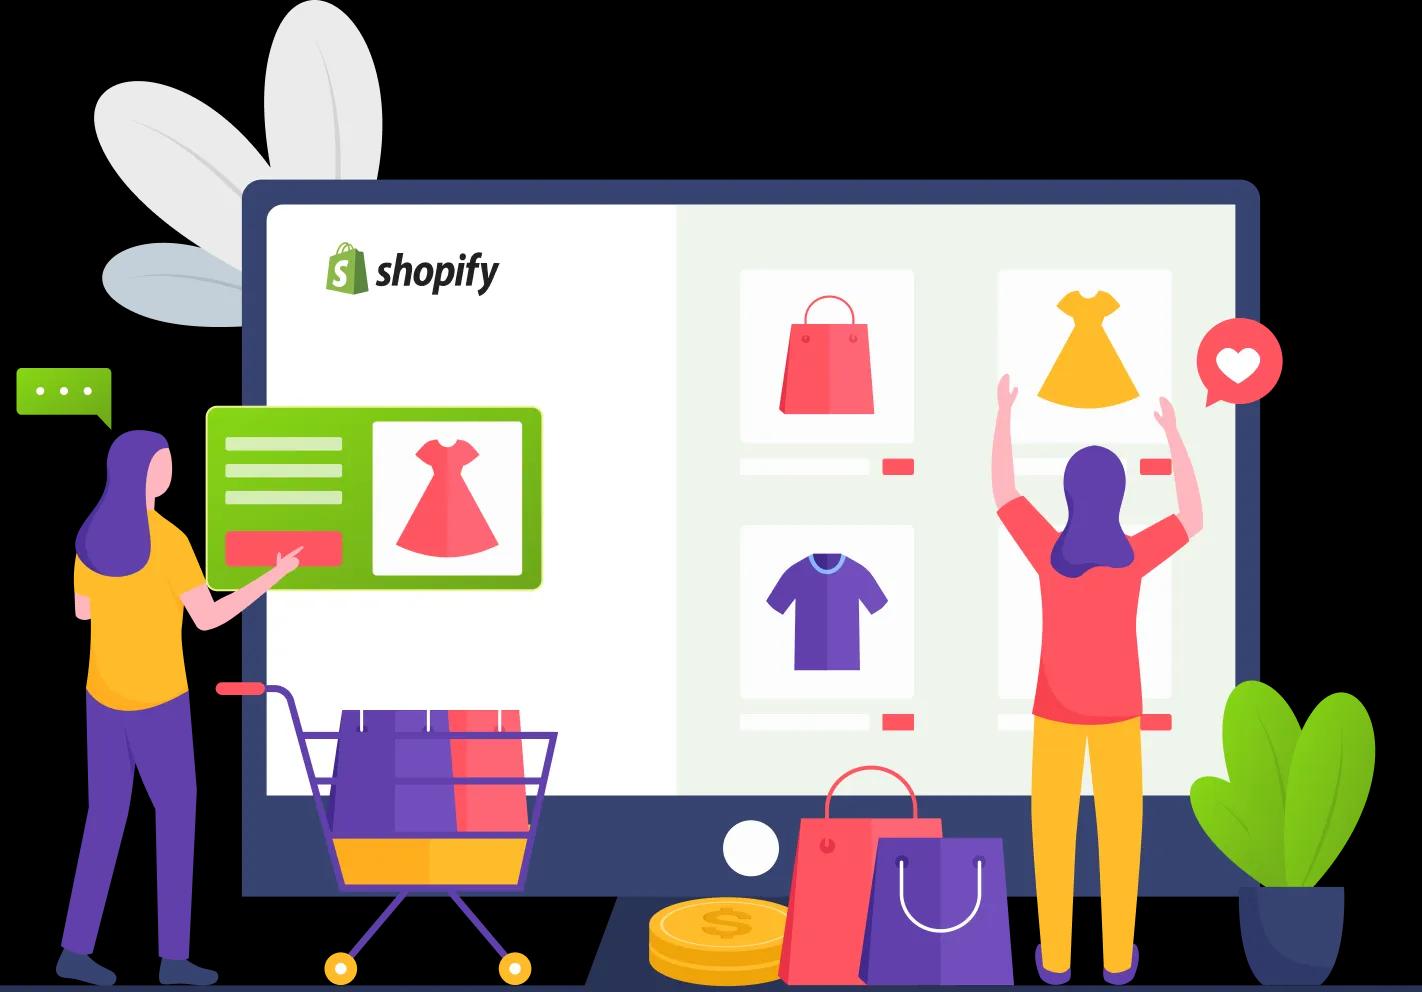 Custom Shopify Theme Development